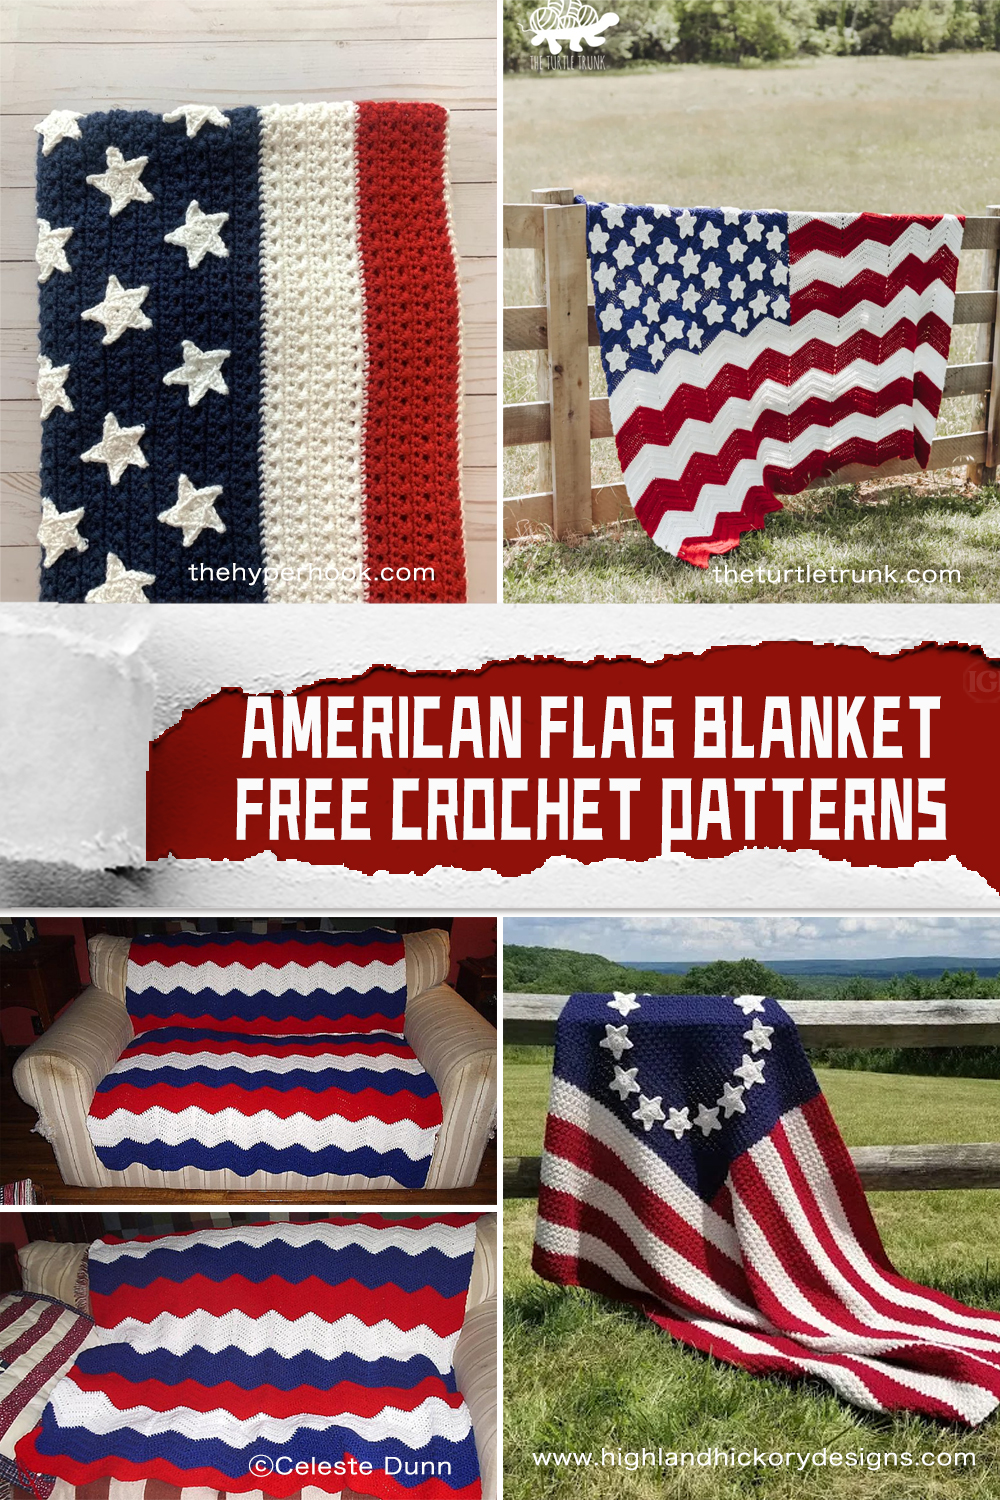 Crochet American Flag Blanket FREE Patterns